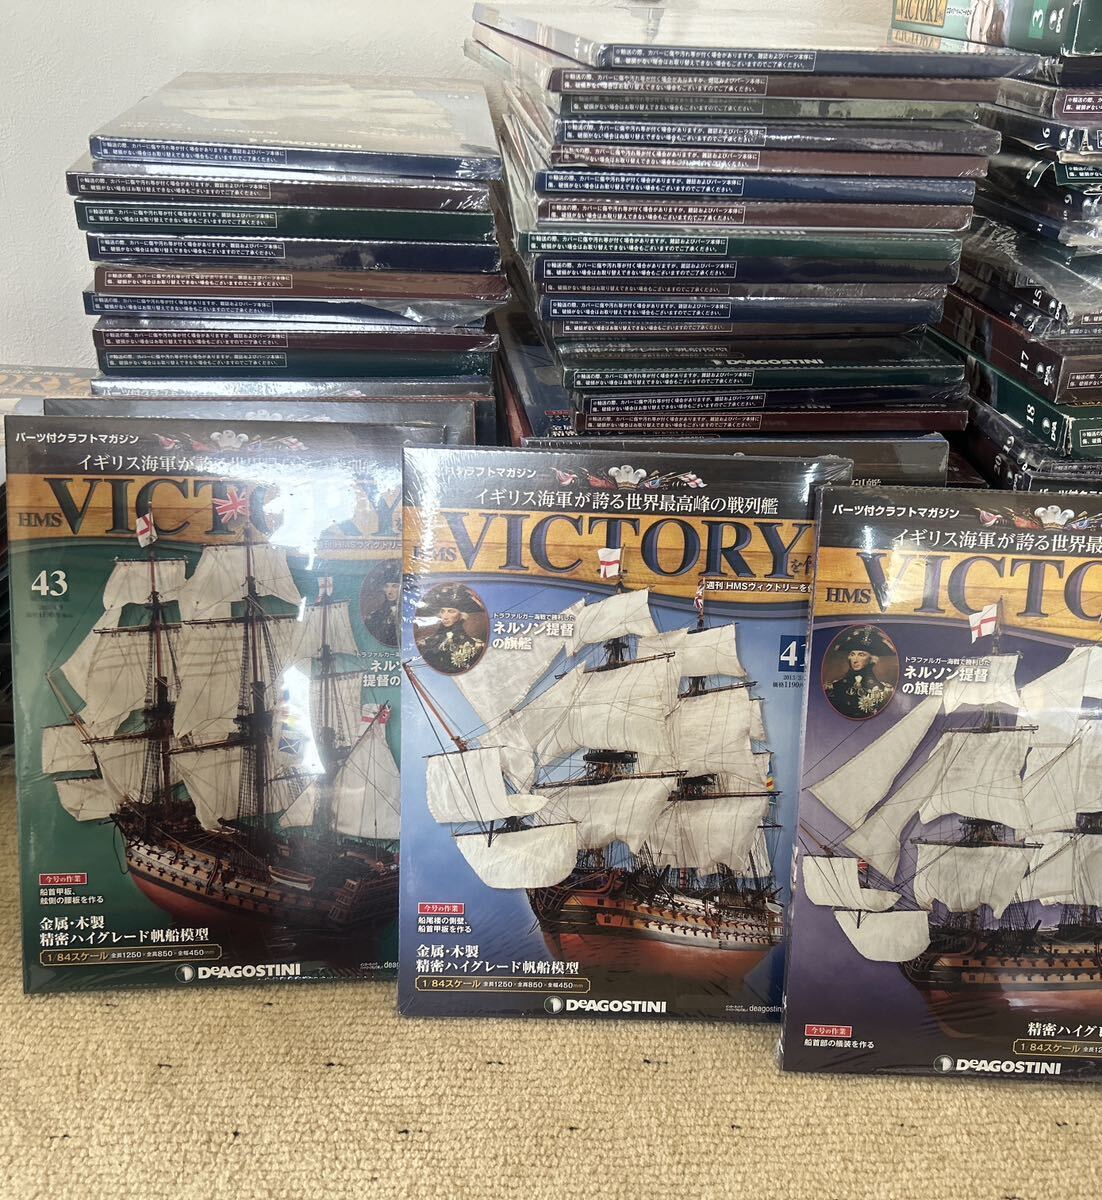  der Goss tea ni sailing boat model vi kto Lee . work .1 volume ~120 volume all volume set HMS Victory . work .DeAGOSTINI victory